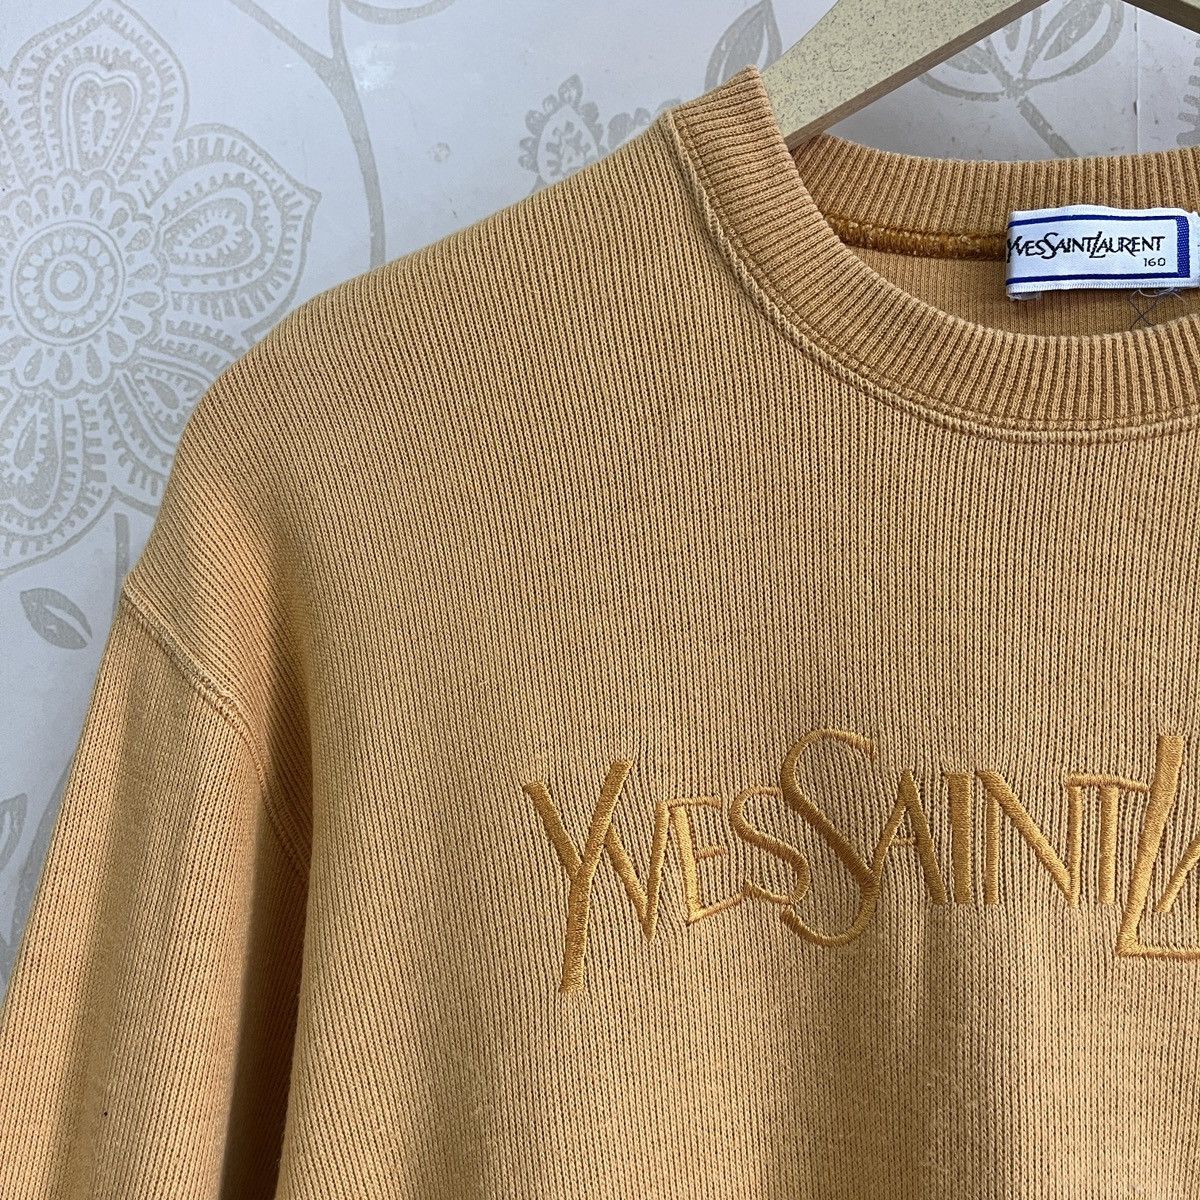 Sun Faded Vintage Yves Saint Laurent Sweater - 6